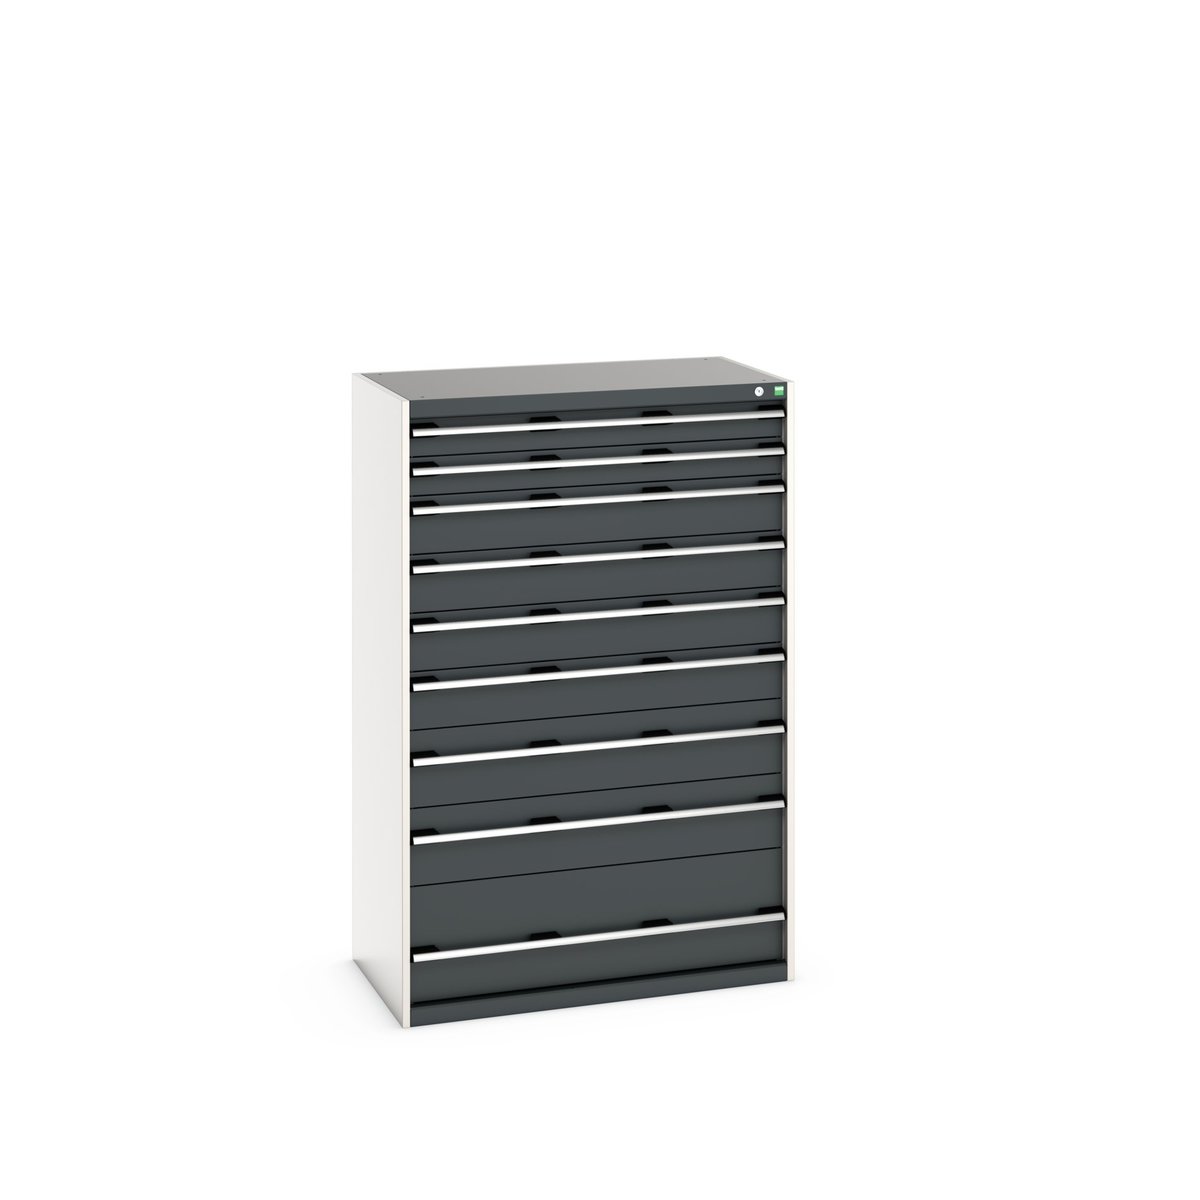 40021044. - cubio drawer cabinet